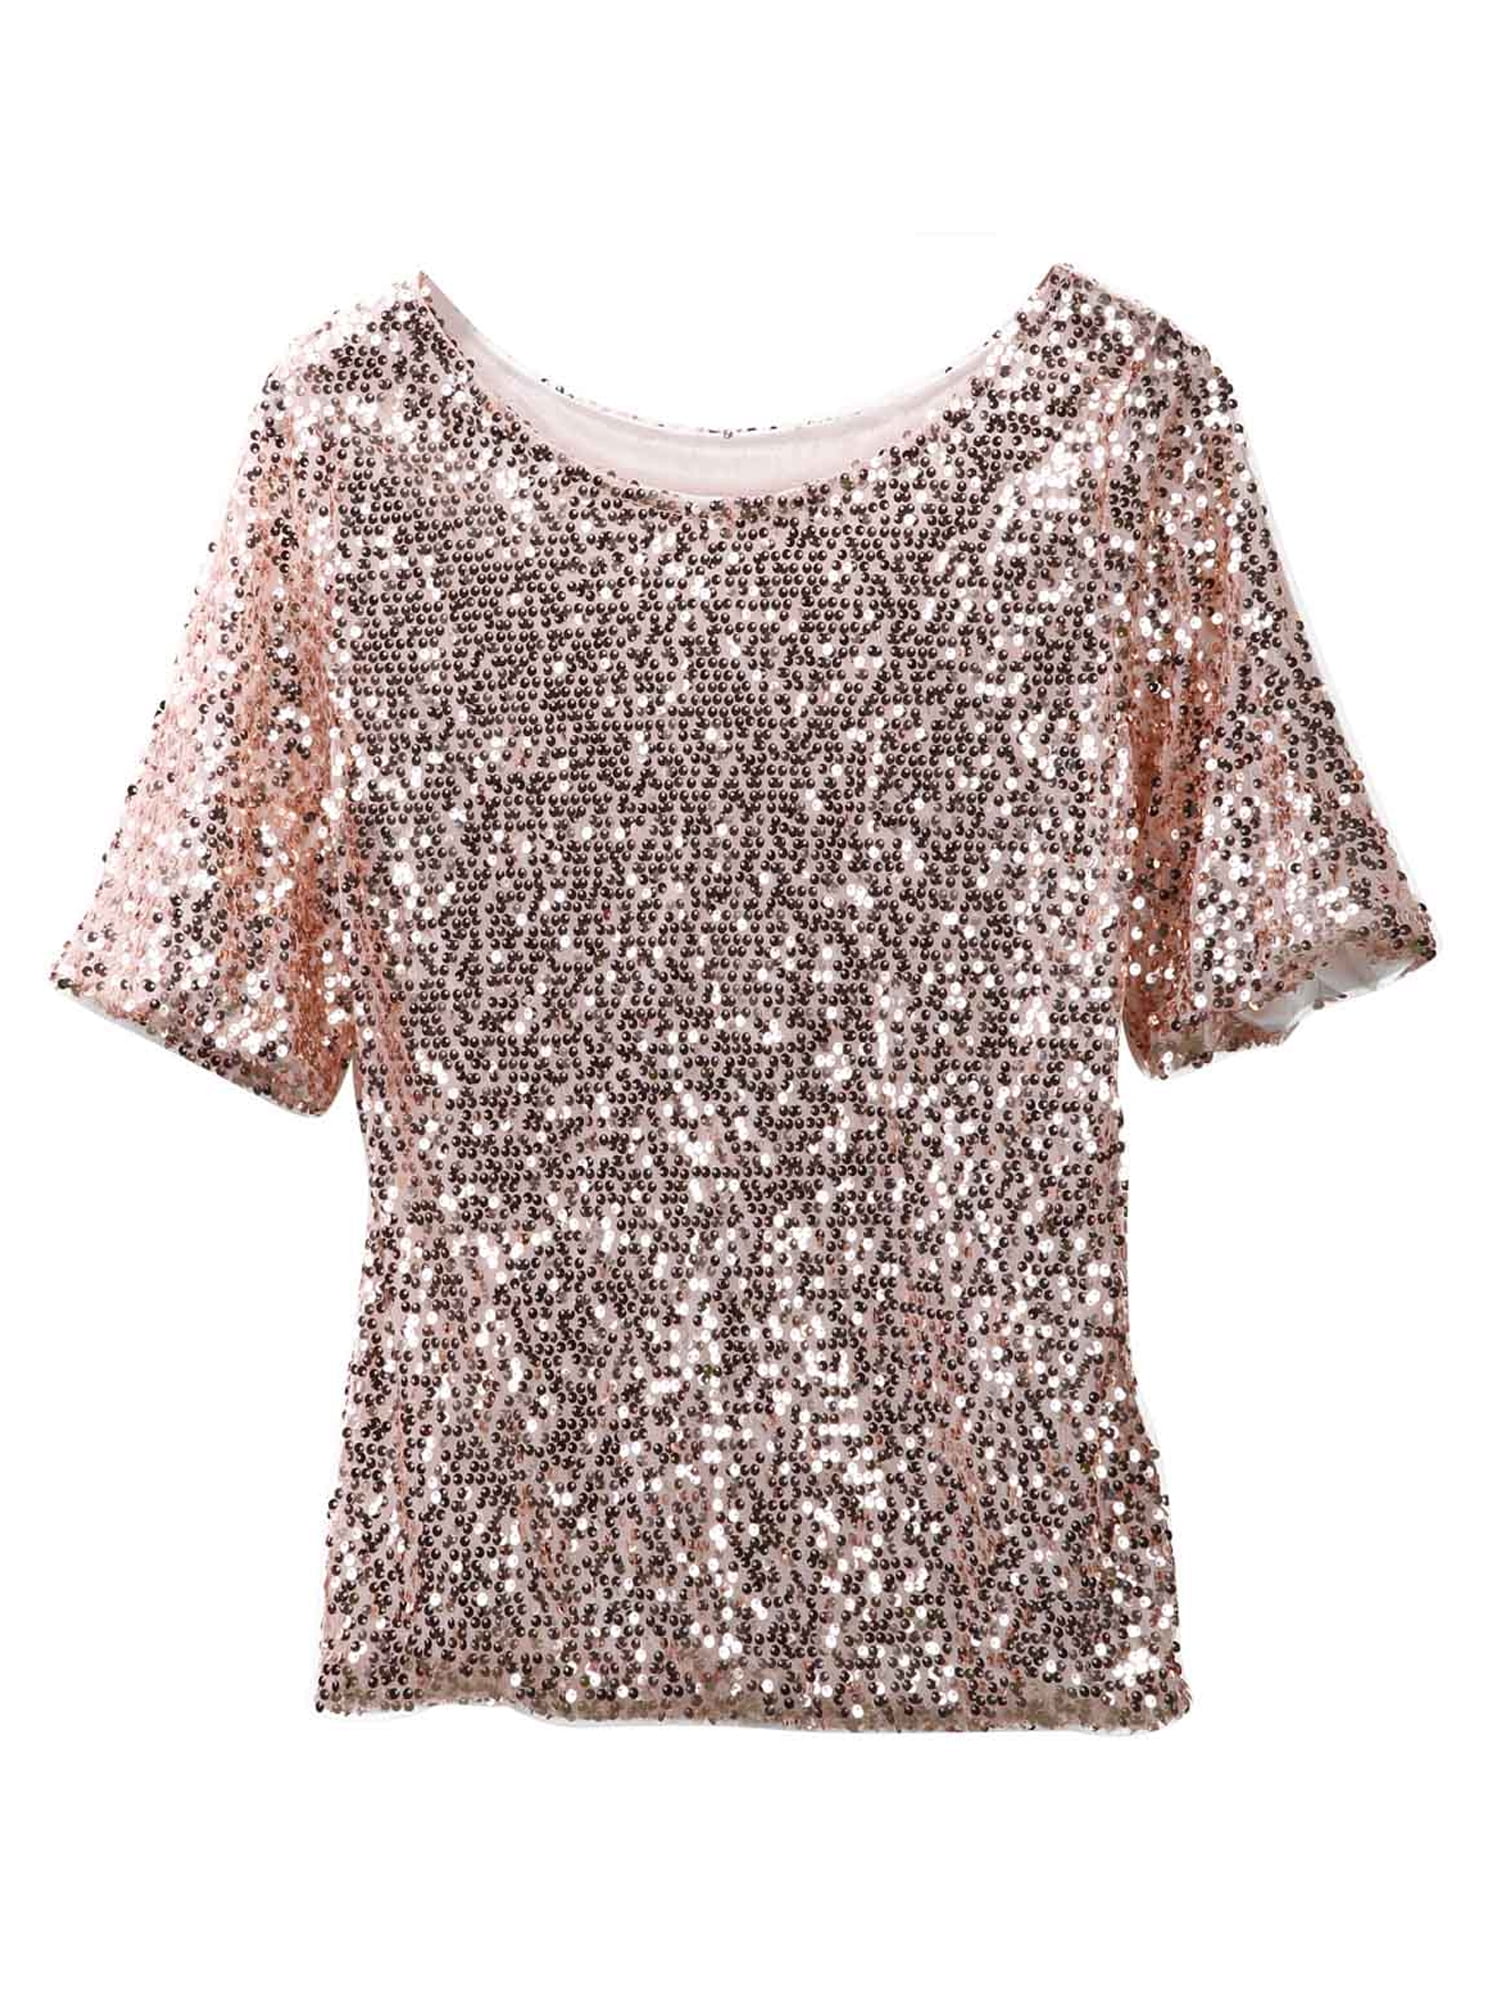 Fashion Women Short Sleeve Digital Print Sequined Easy Casual Shirt T-Shirt Tops